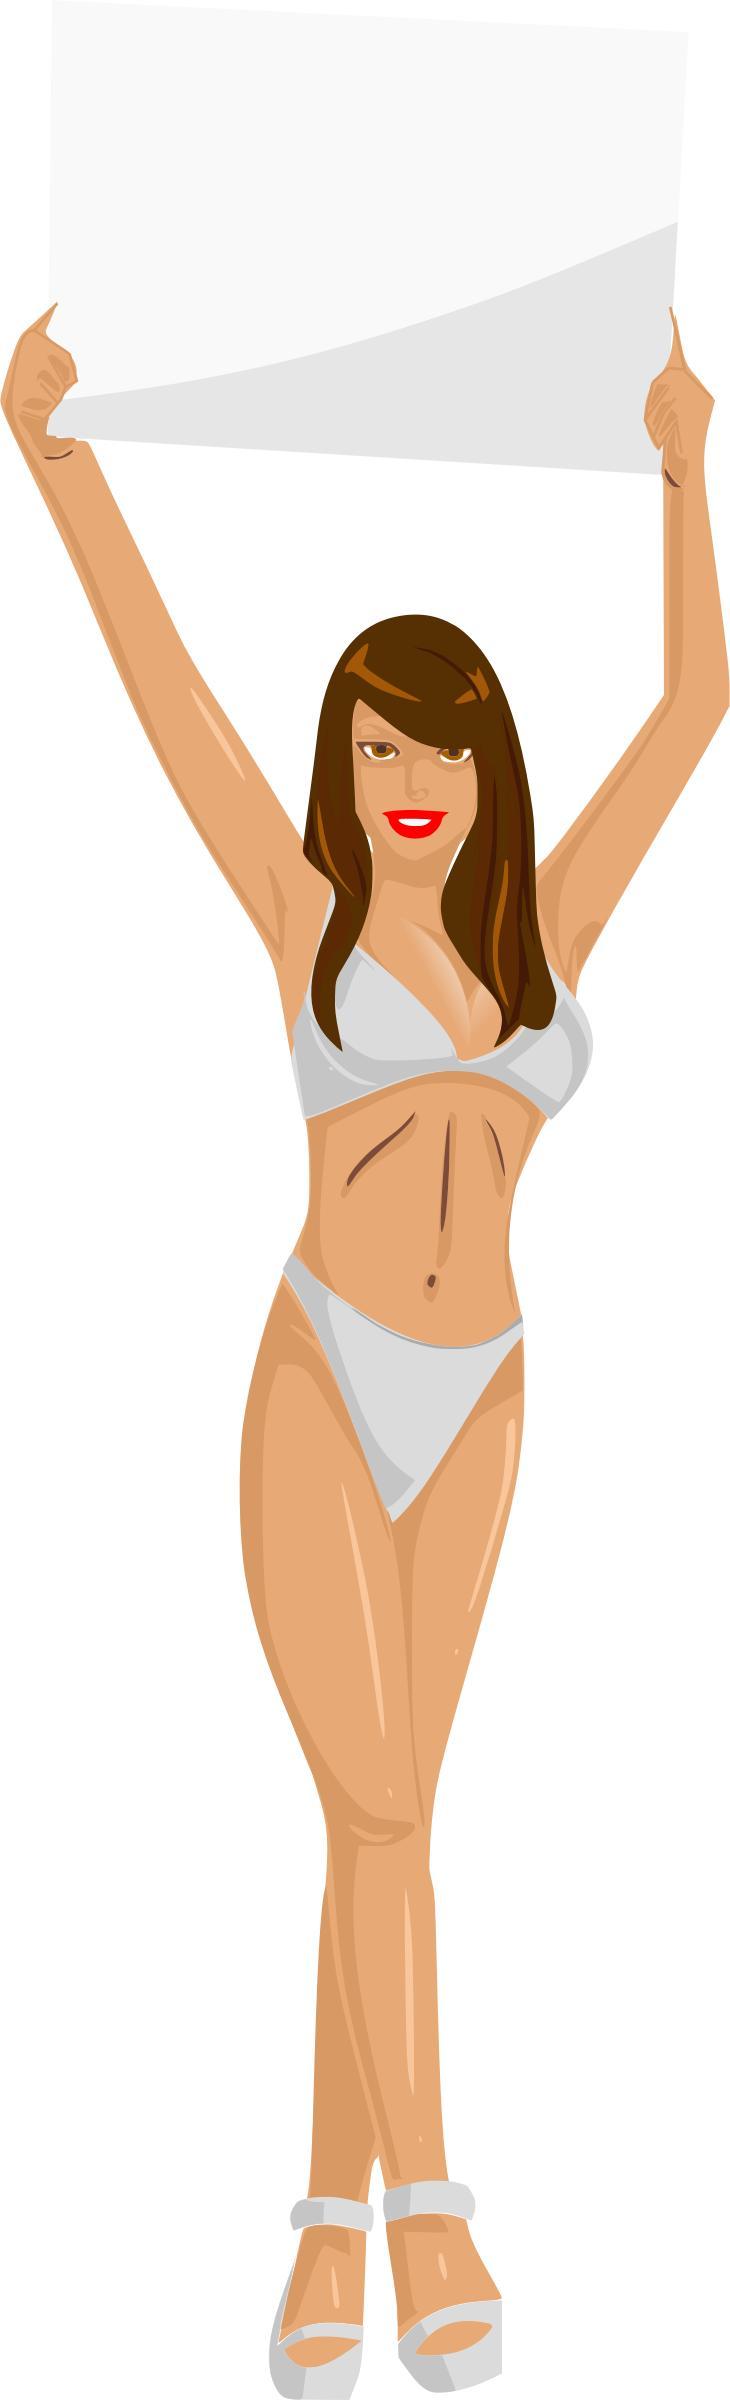 Girl with sign (white bikini, brown hair, light skin) png transparent